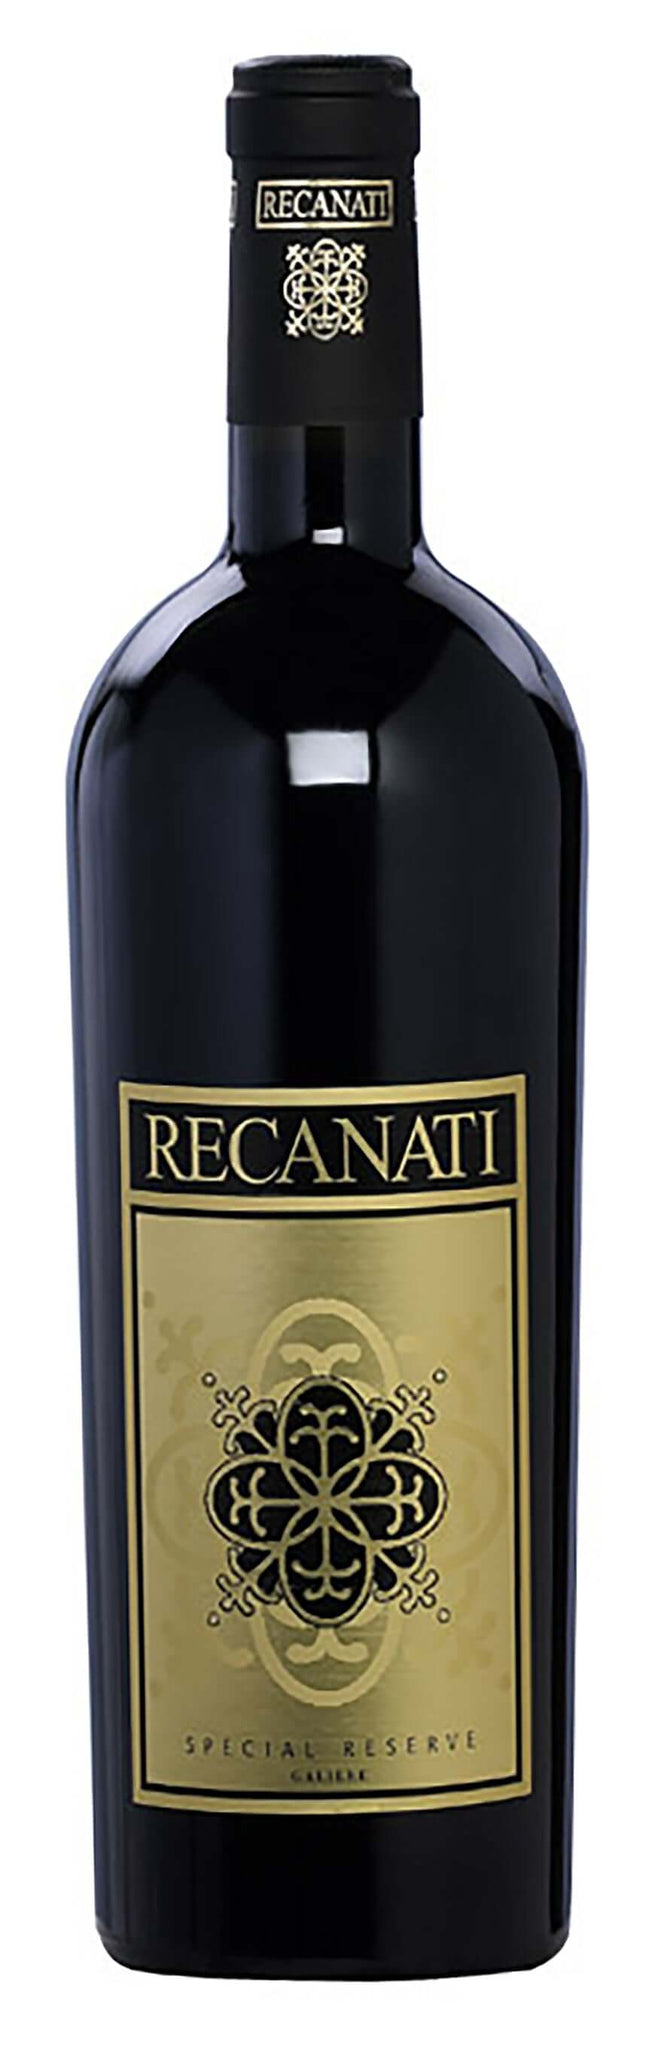 2019 Recanati Special Reserve